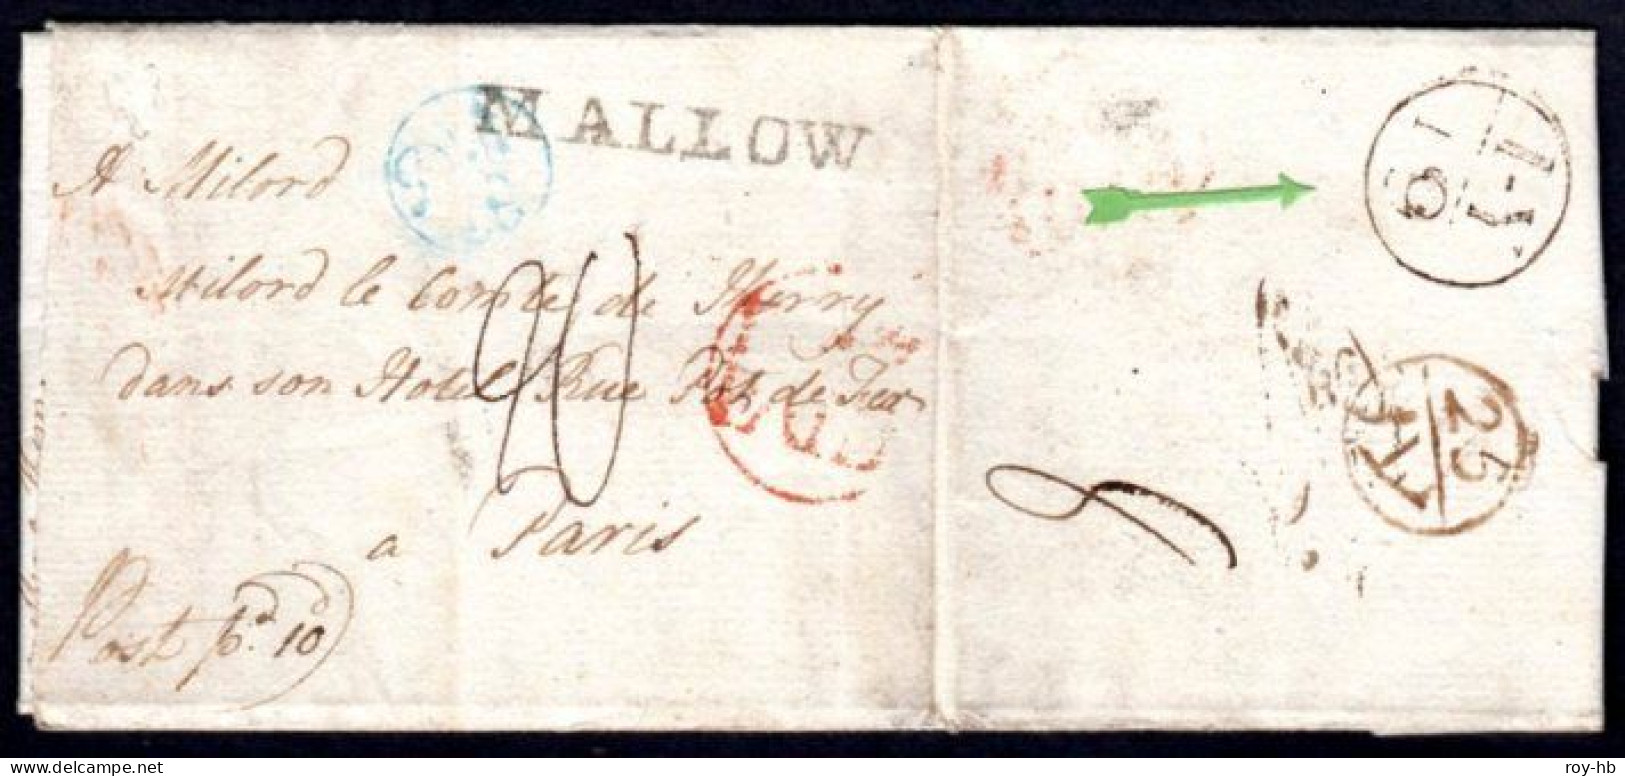 1782 Entire Letter To Paris With Very Fine MALLOW (light Filing Fold Through W), M/s Post Pd 10d. - Vorphilatelie